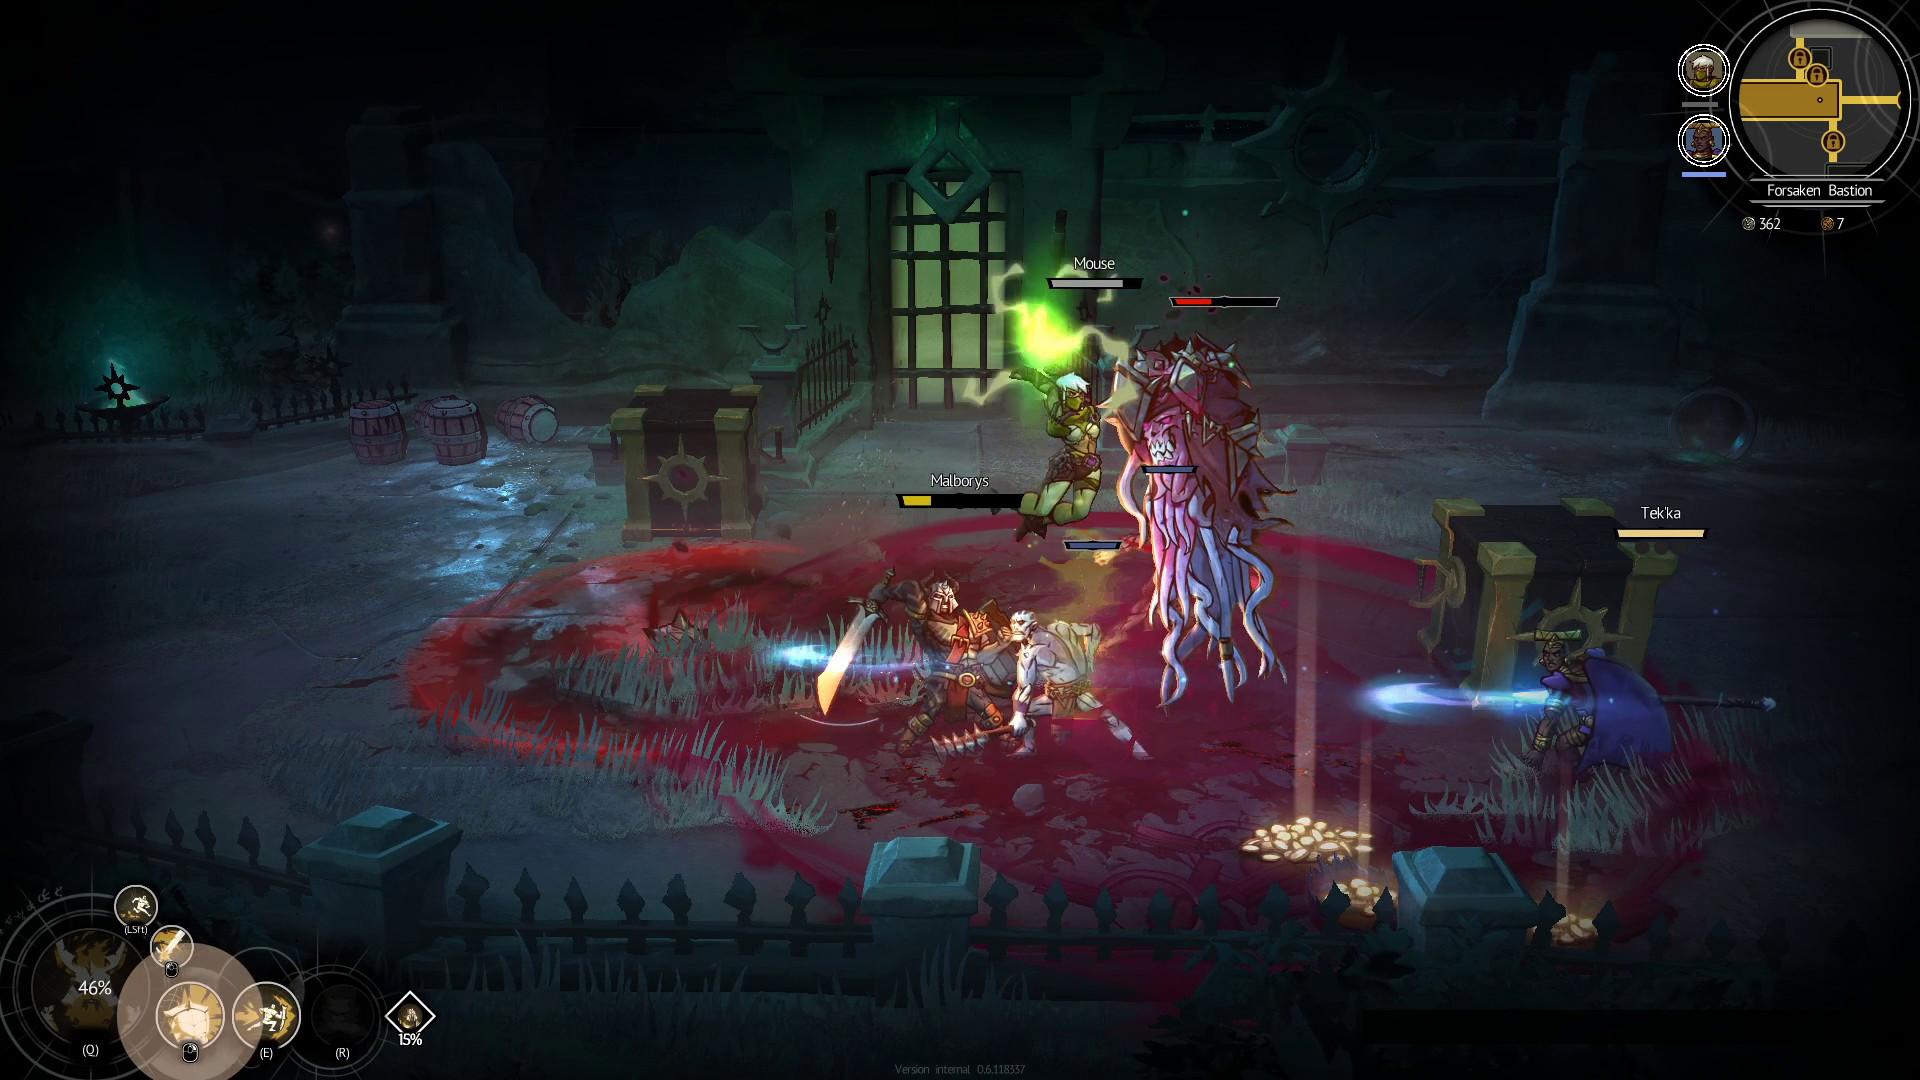 Screenshot №9 from game Blightbound